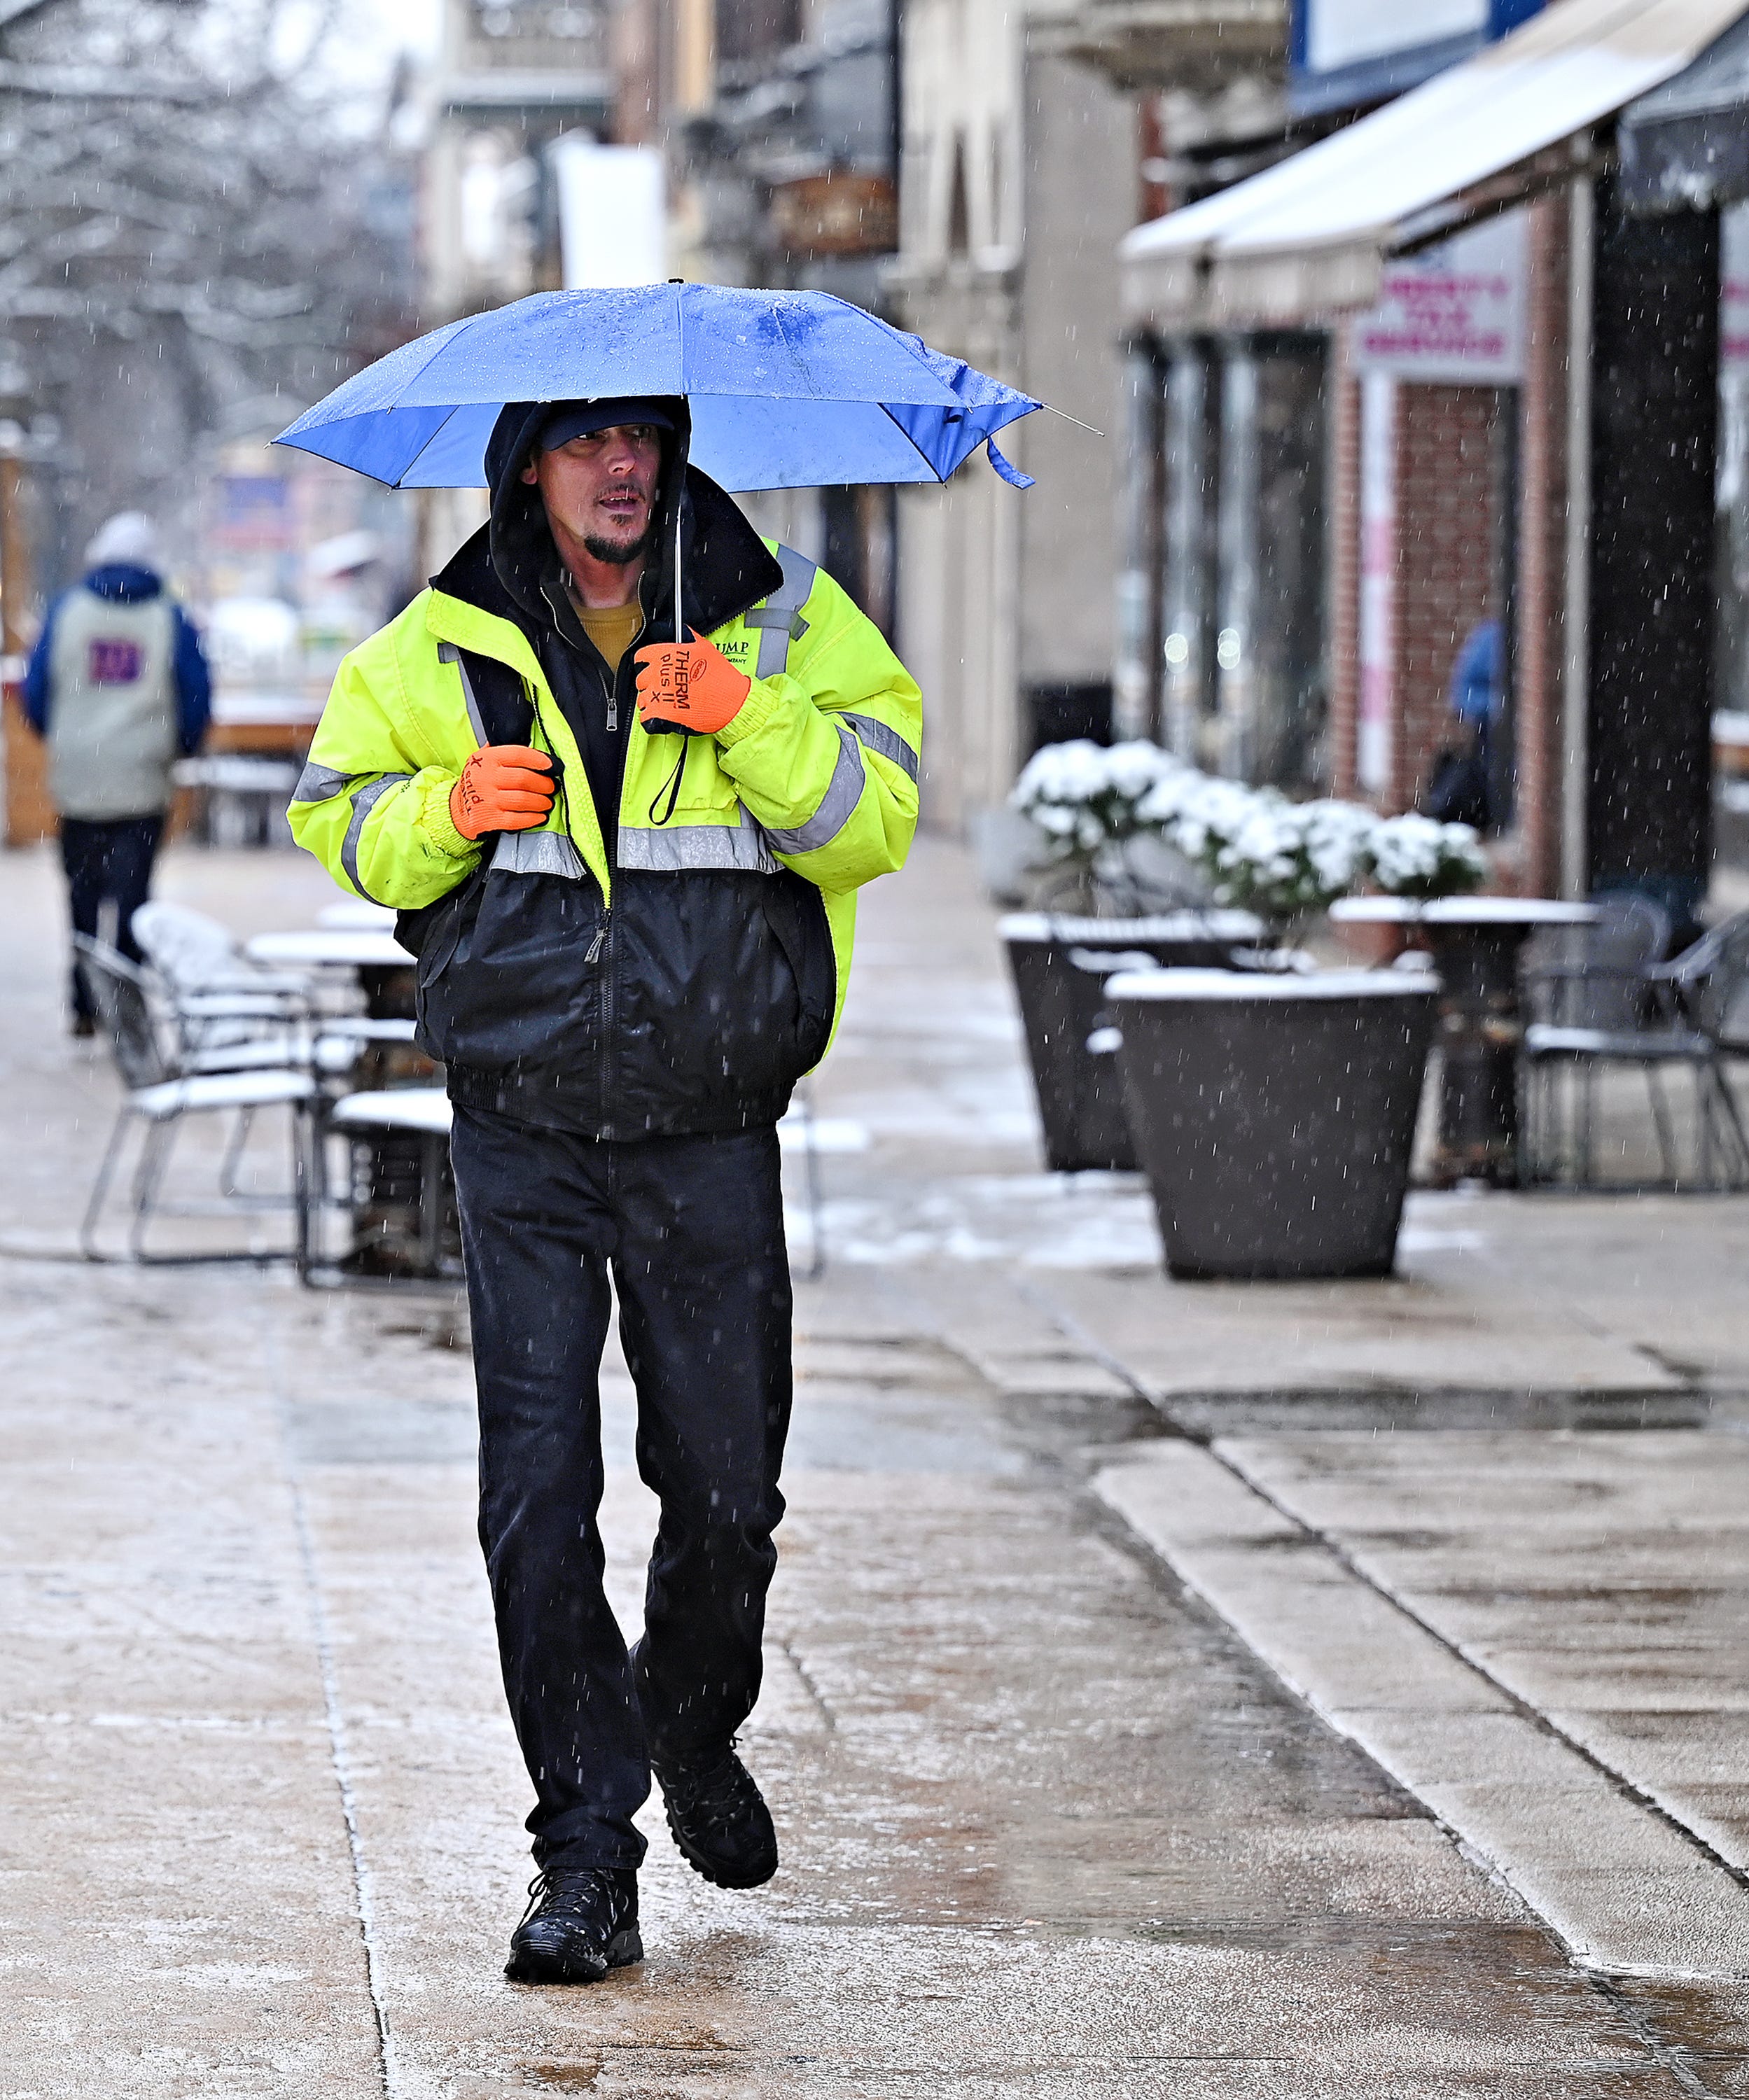 Brian Runkle, of York City, walks under an umbrella as snow turns to rain in York City, Wednesday, Jan. 25, 2023. Dawn J. Sagert photo